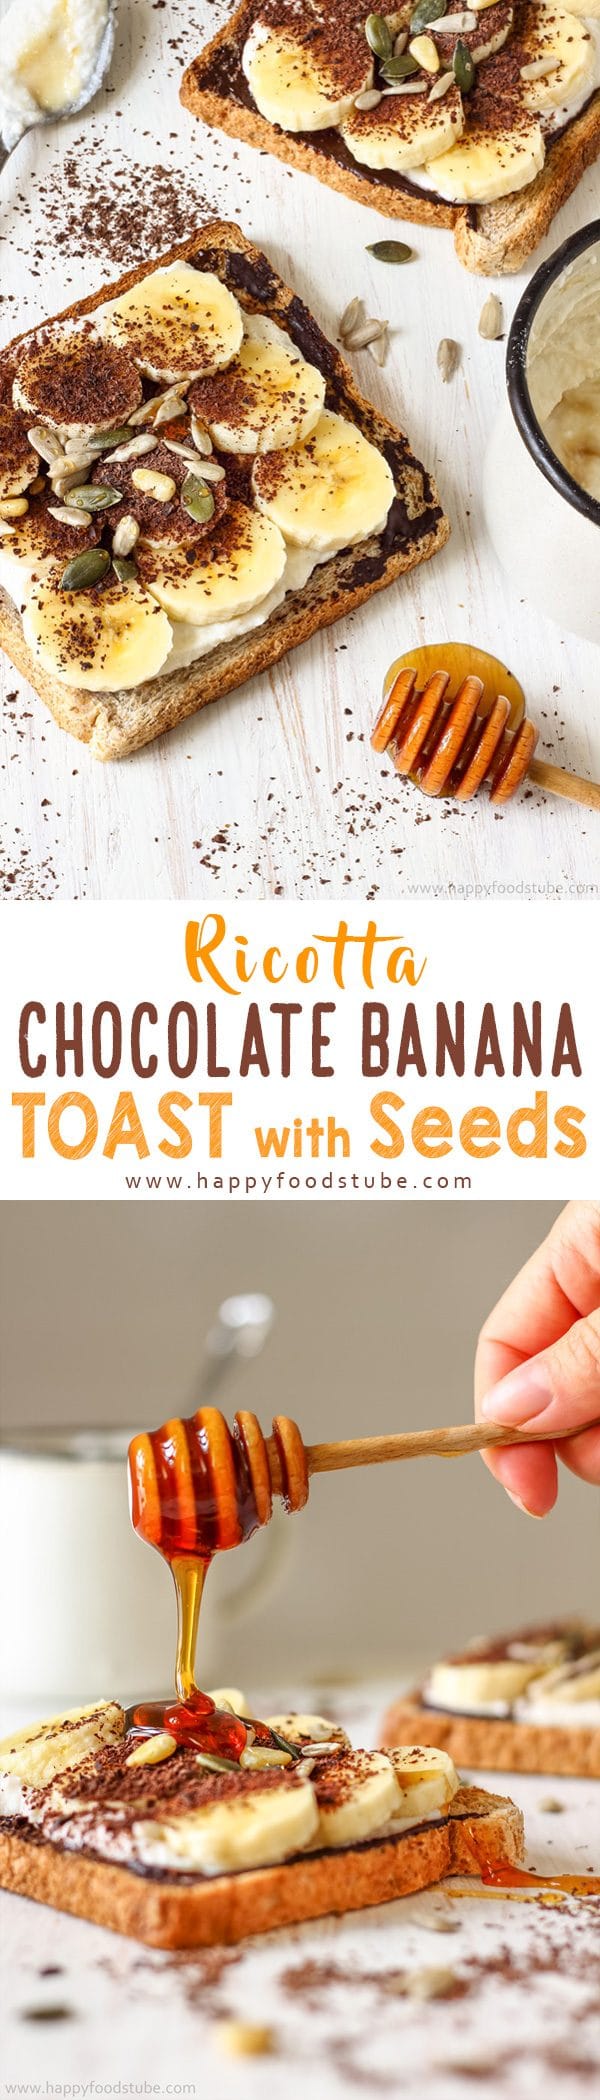 Ricotta Chocolate Banana Toast with Seeds Recipe